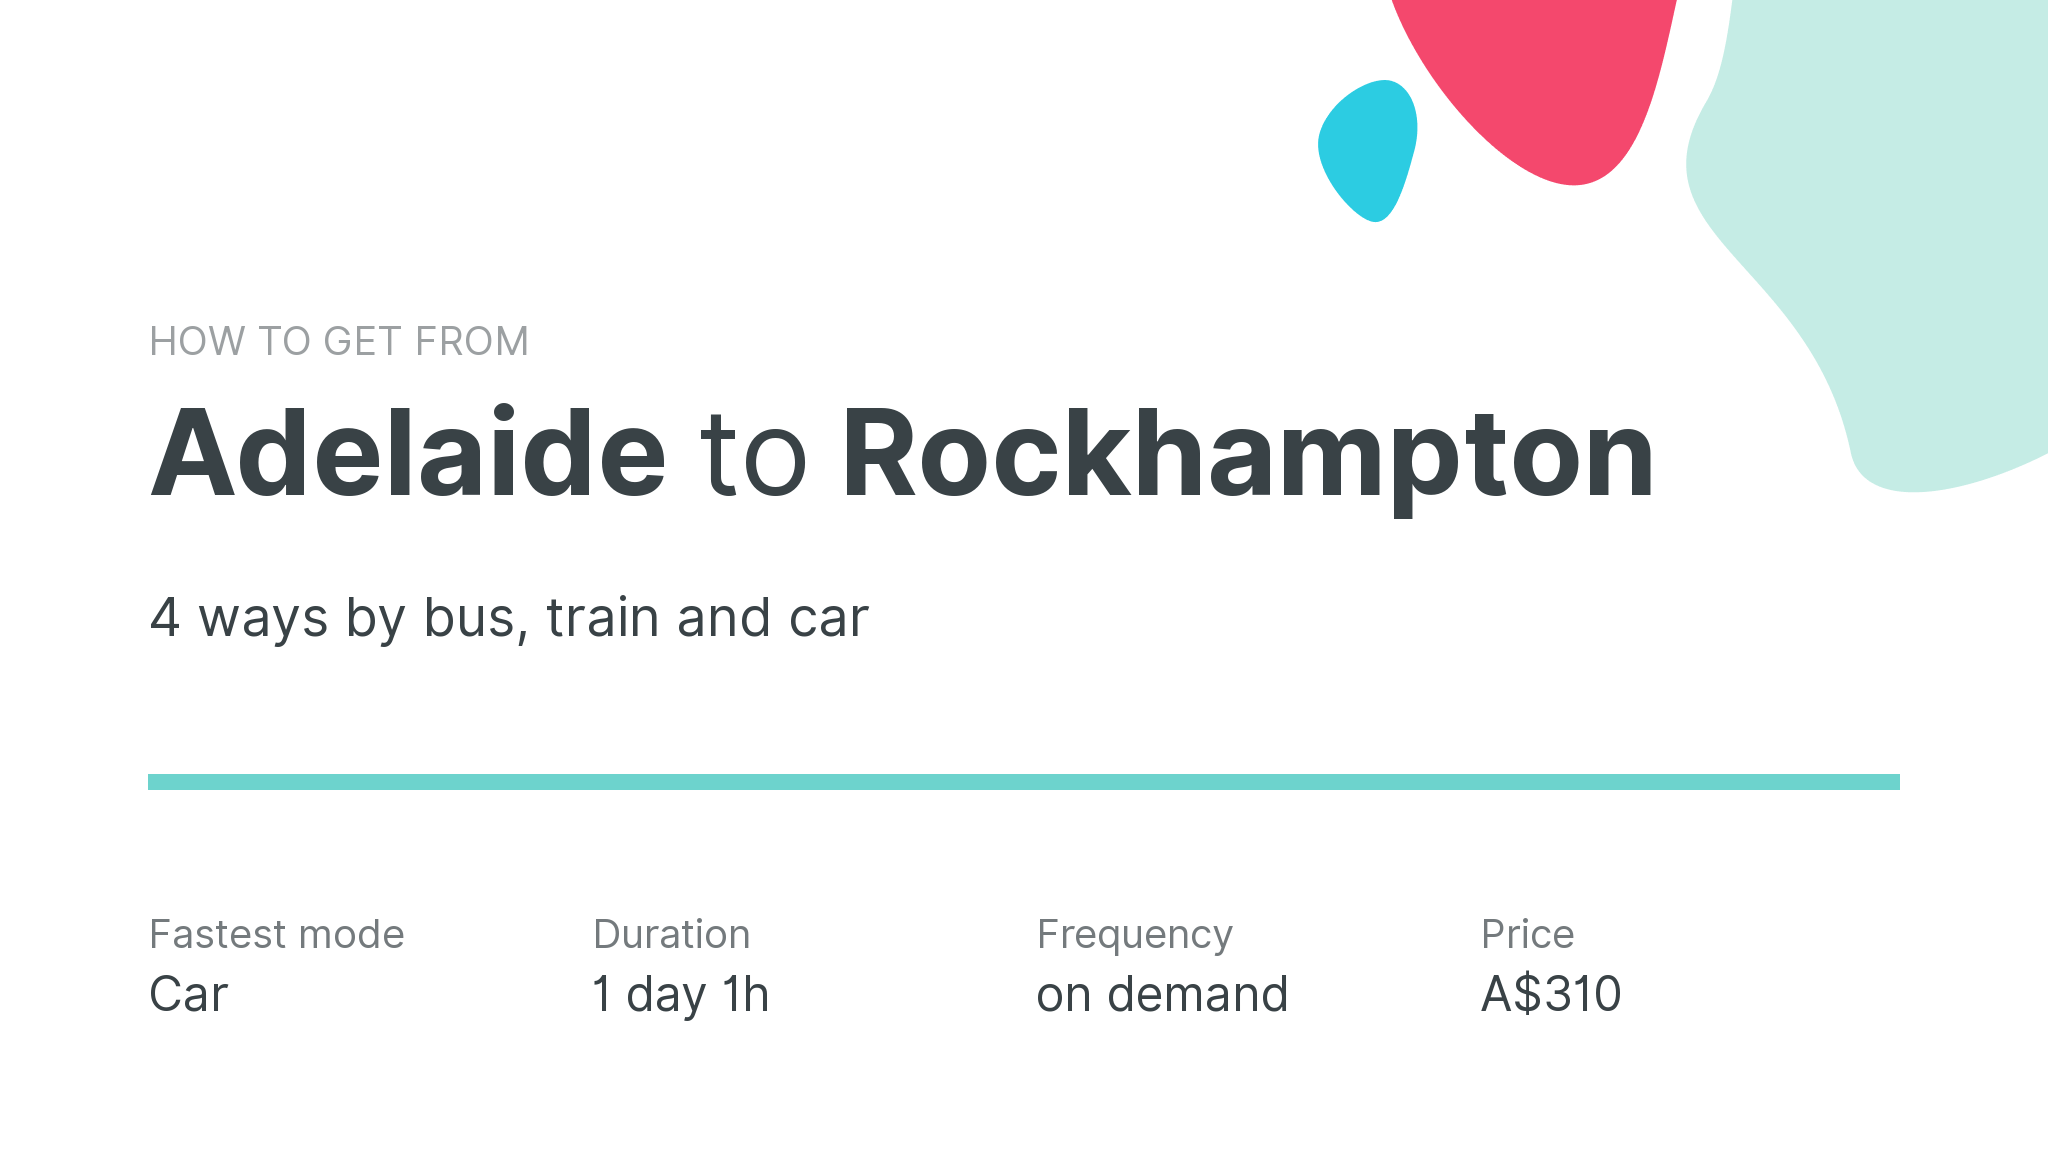 How do I get from Adelaide to Rockhampton